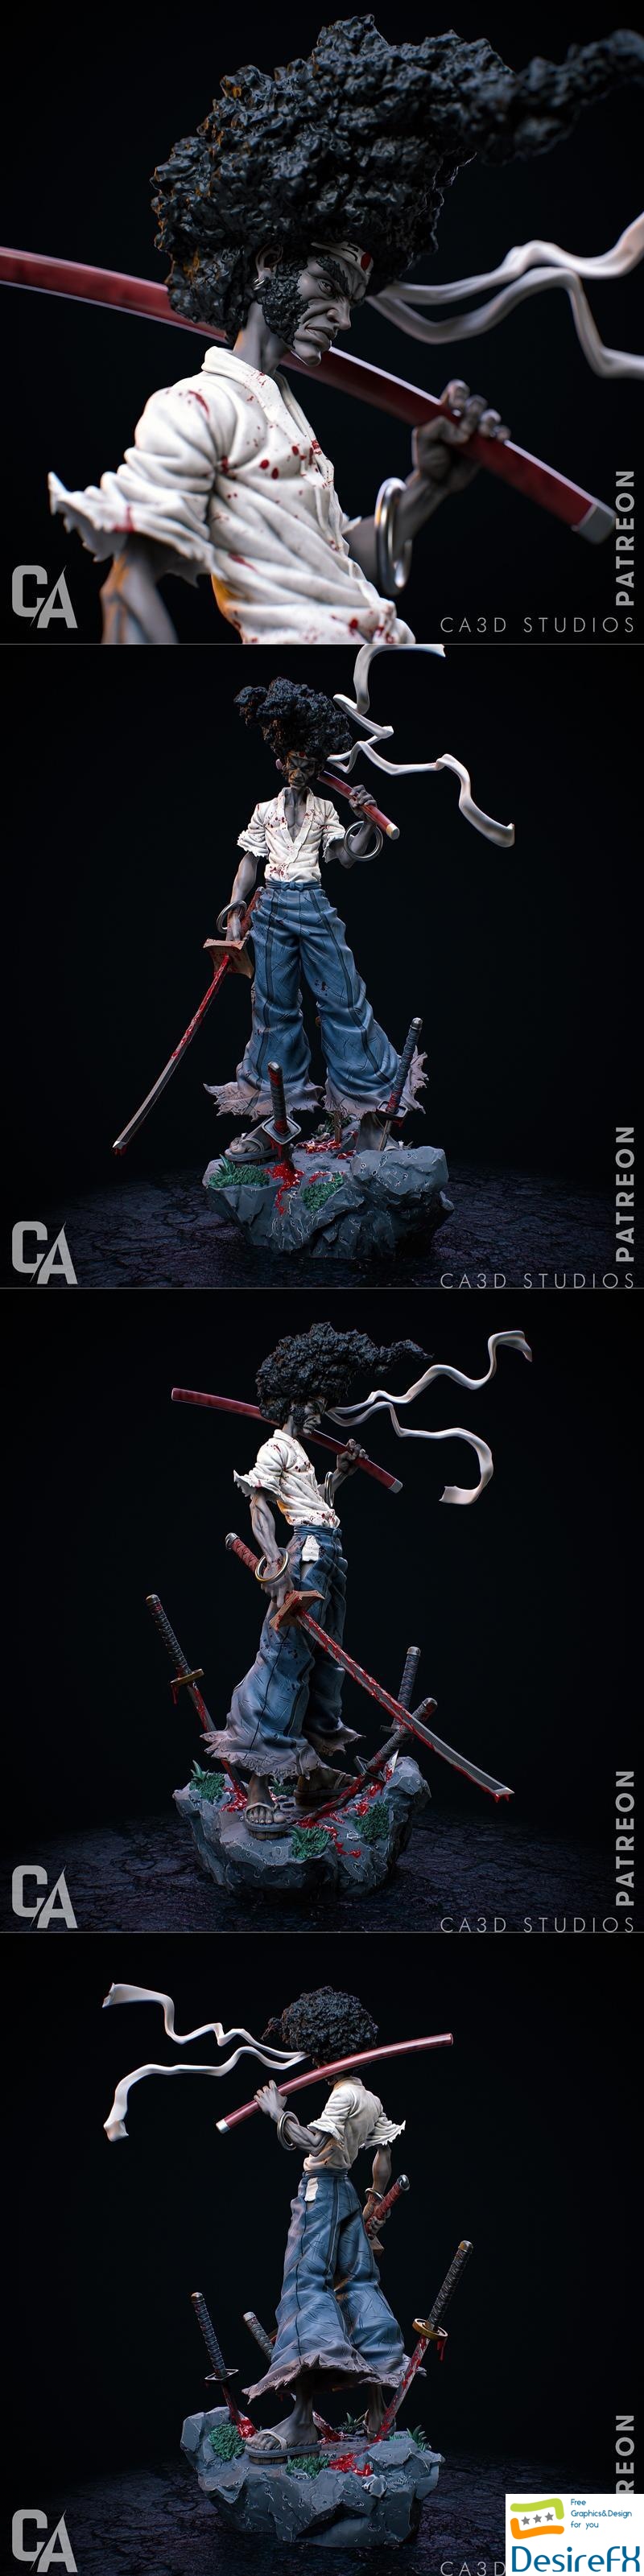 Ca 3d Studios - Afro Samurai 3D Print